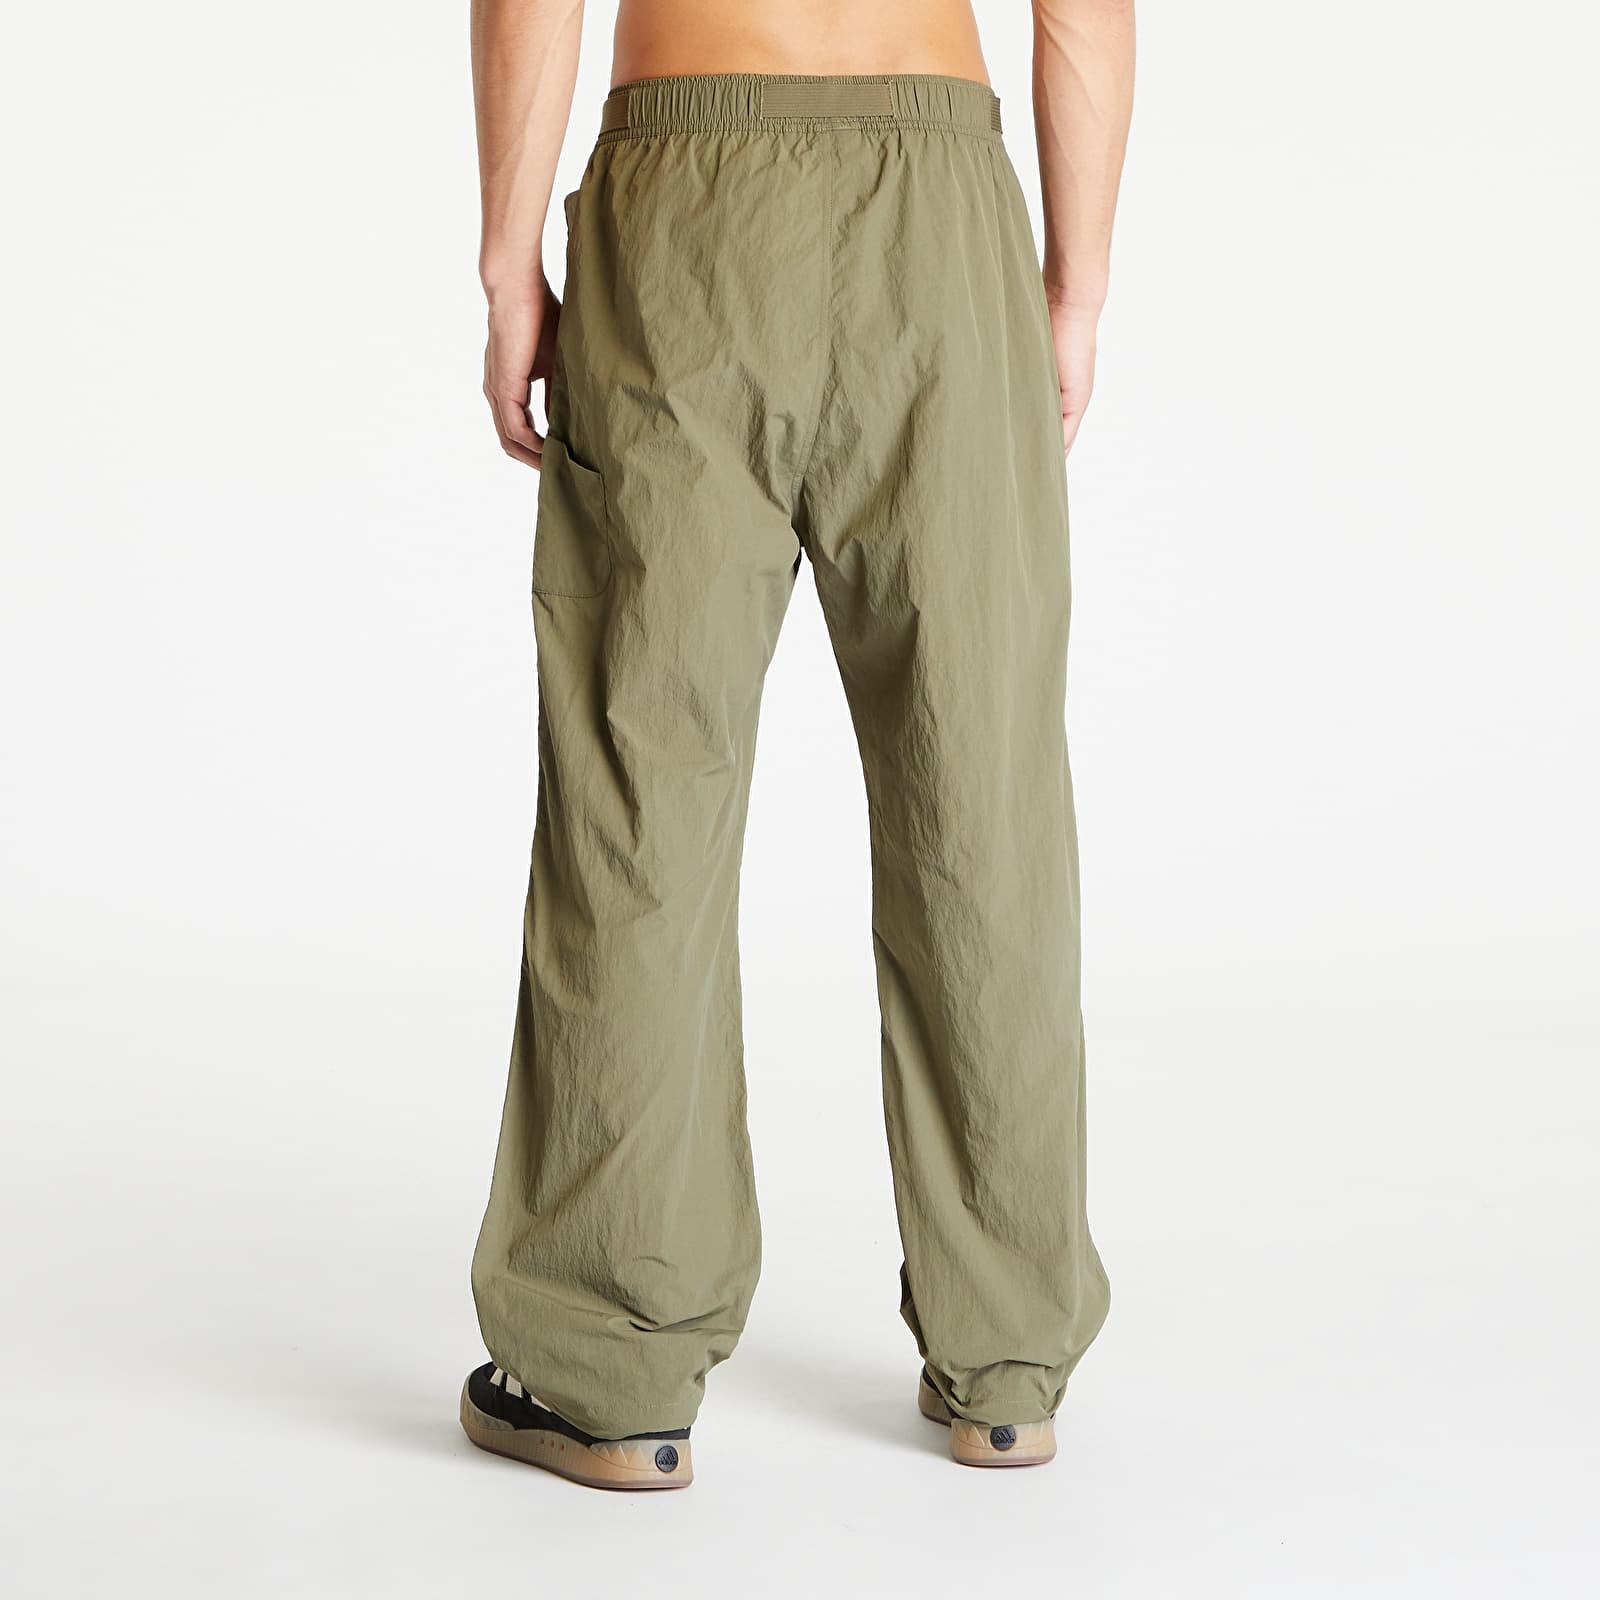 adidas Originals Adventure Cargo Pants | for Green Men in Strata Lyst Olive